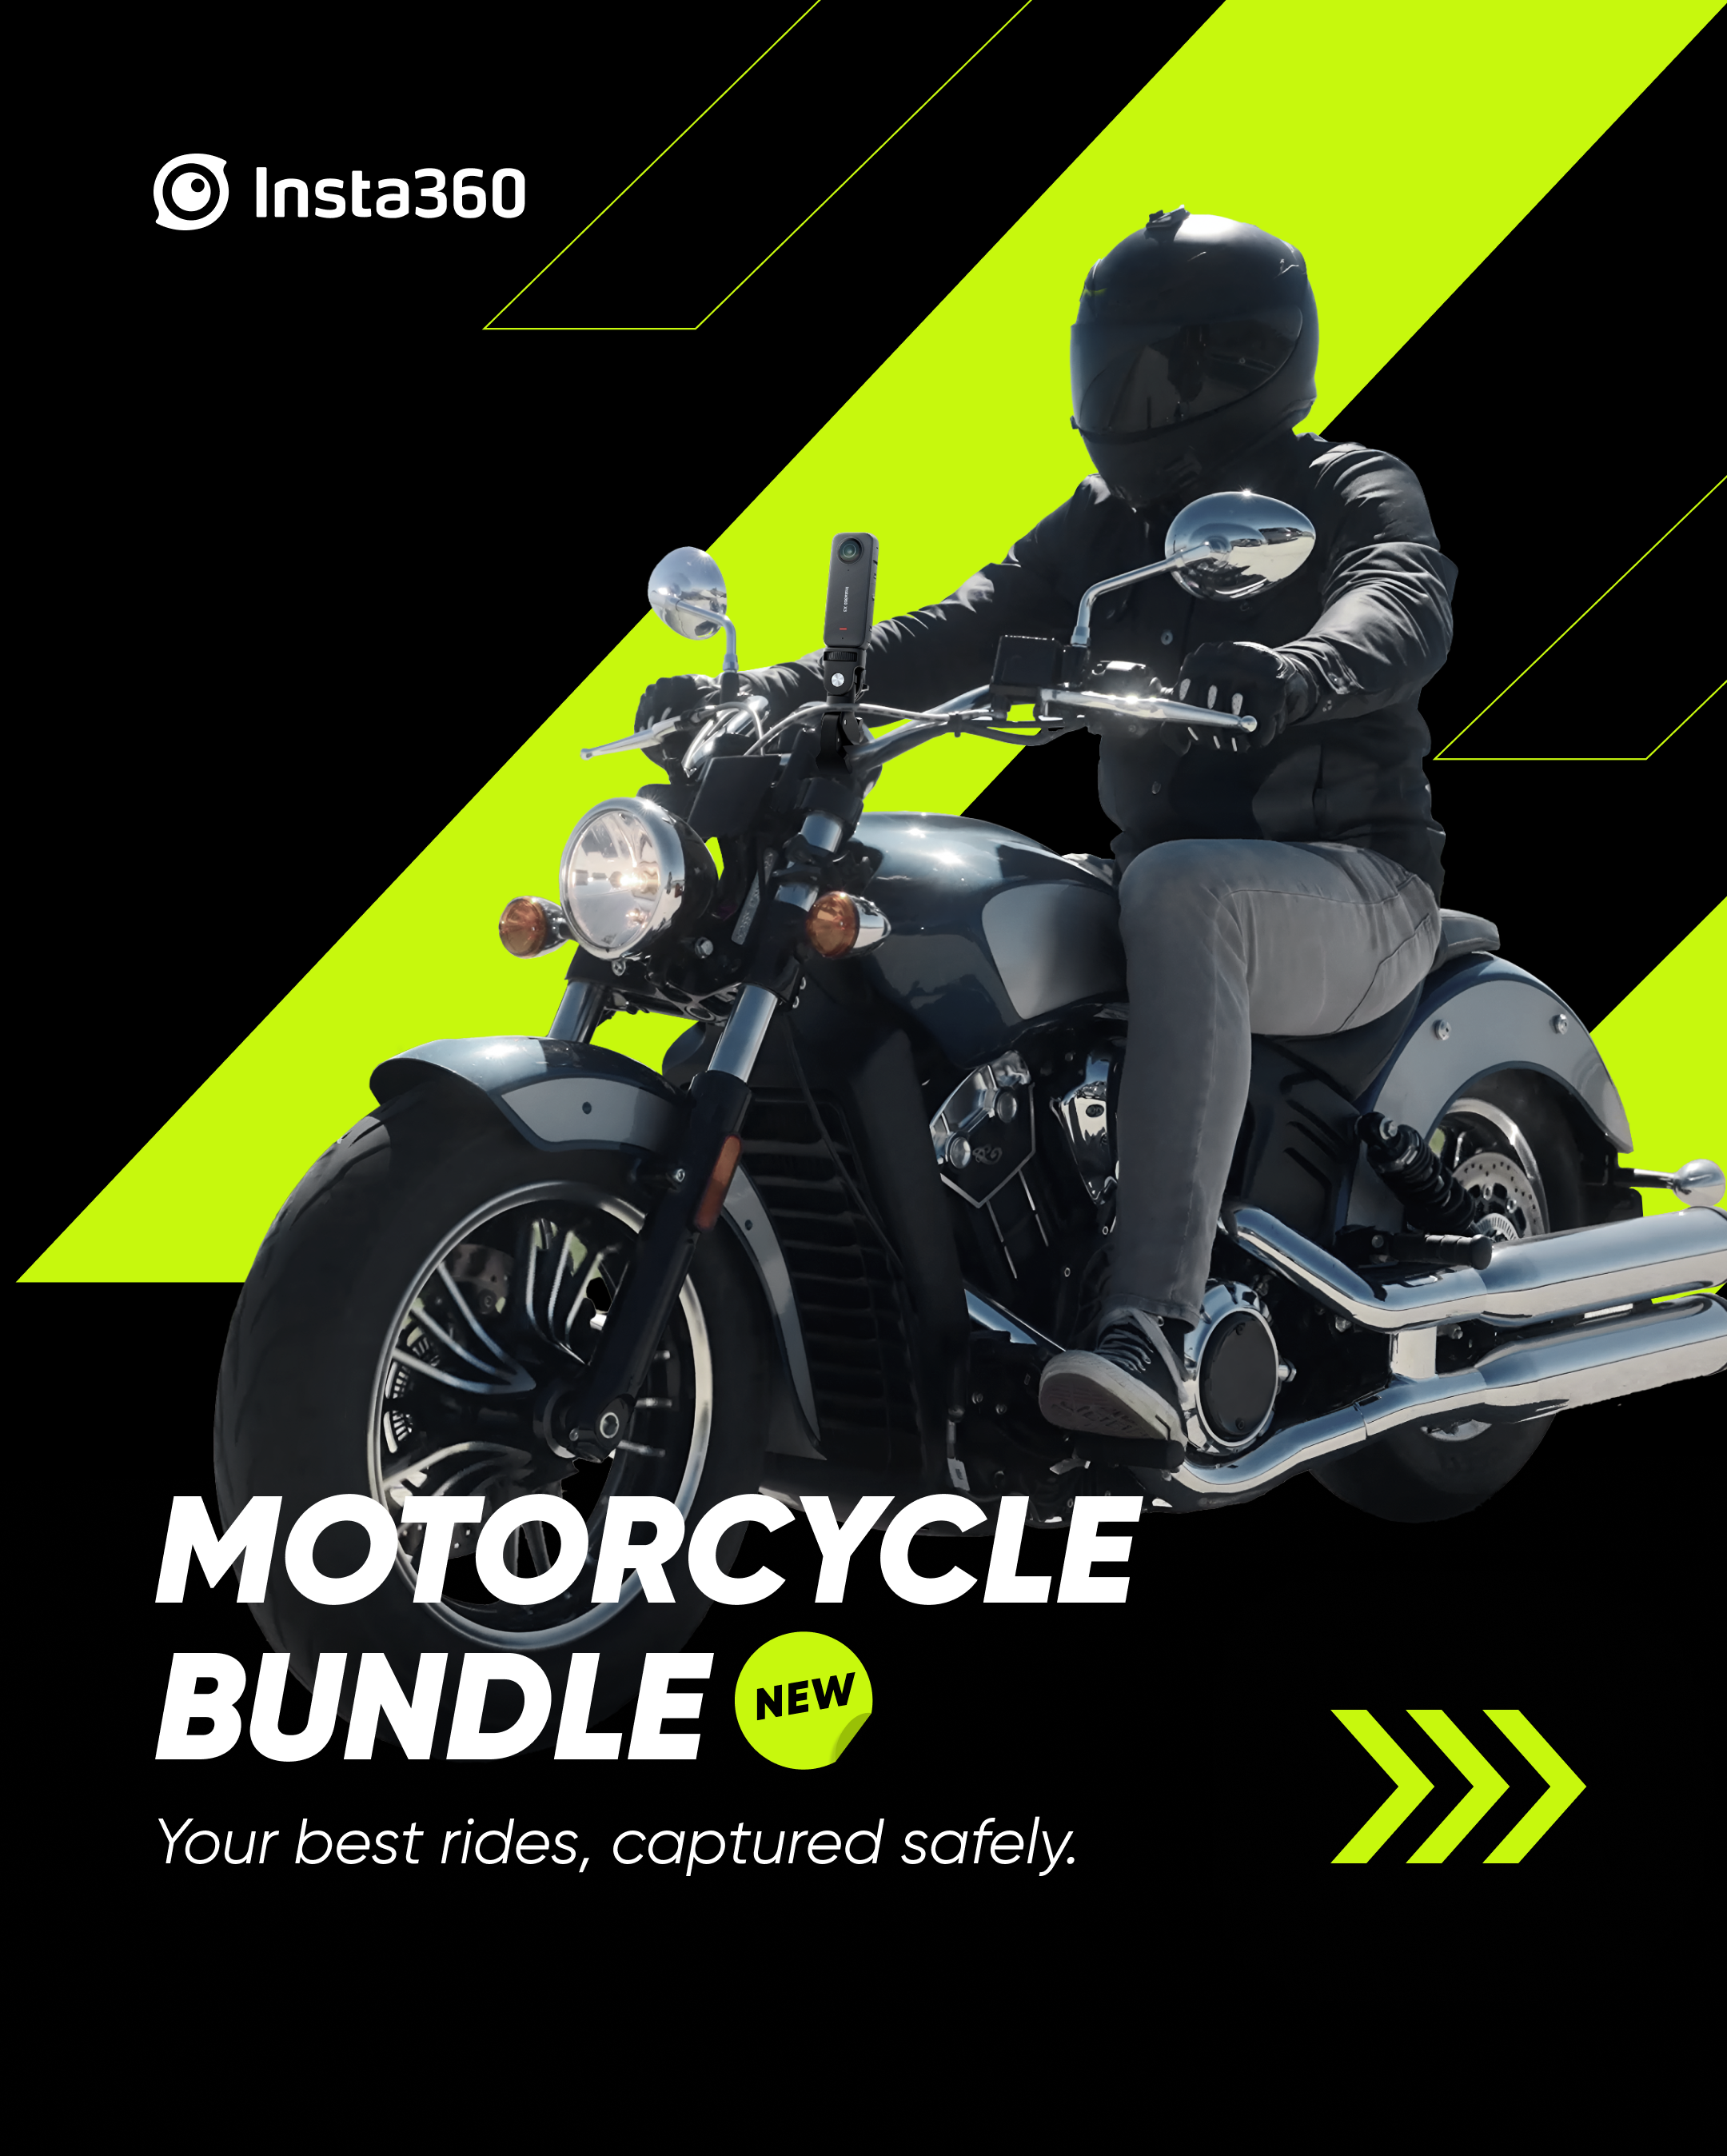 New Insta360 Motorcycle Bundle